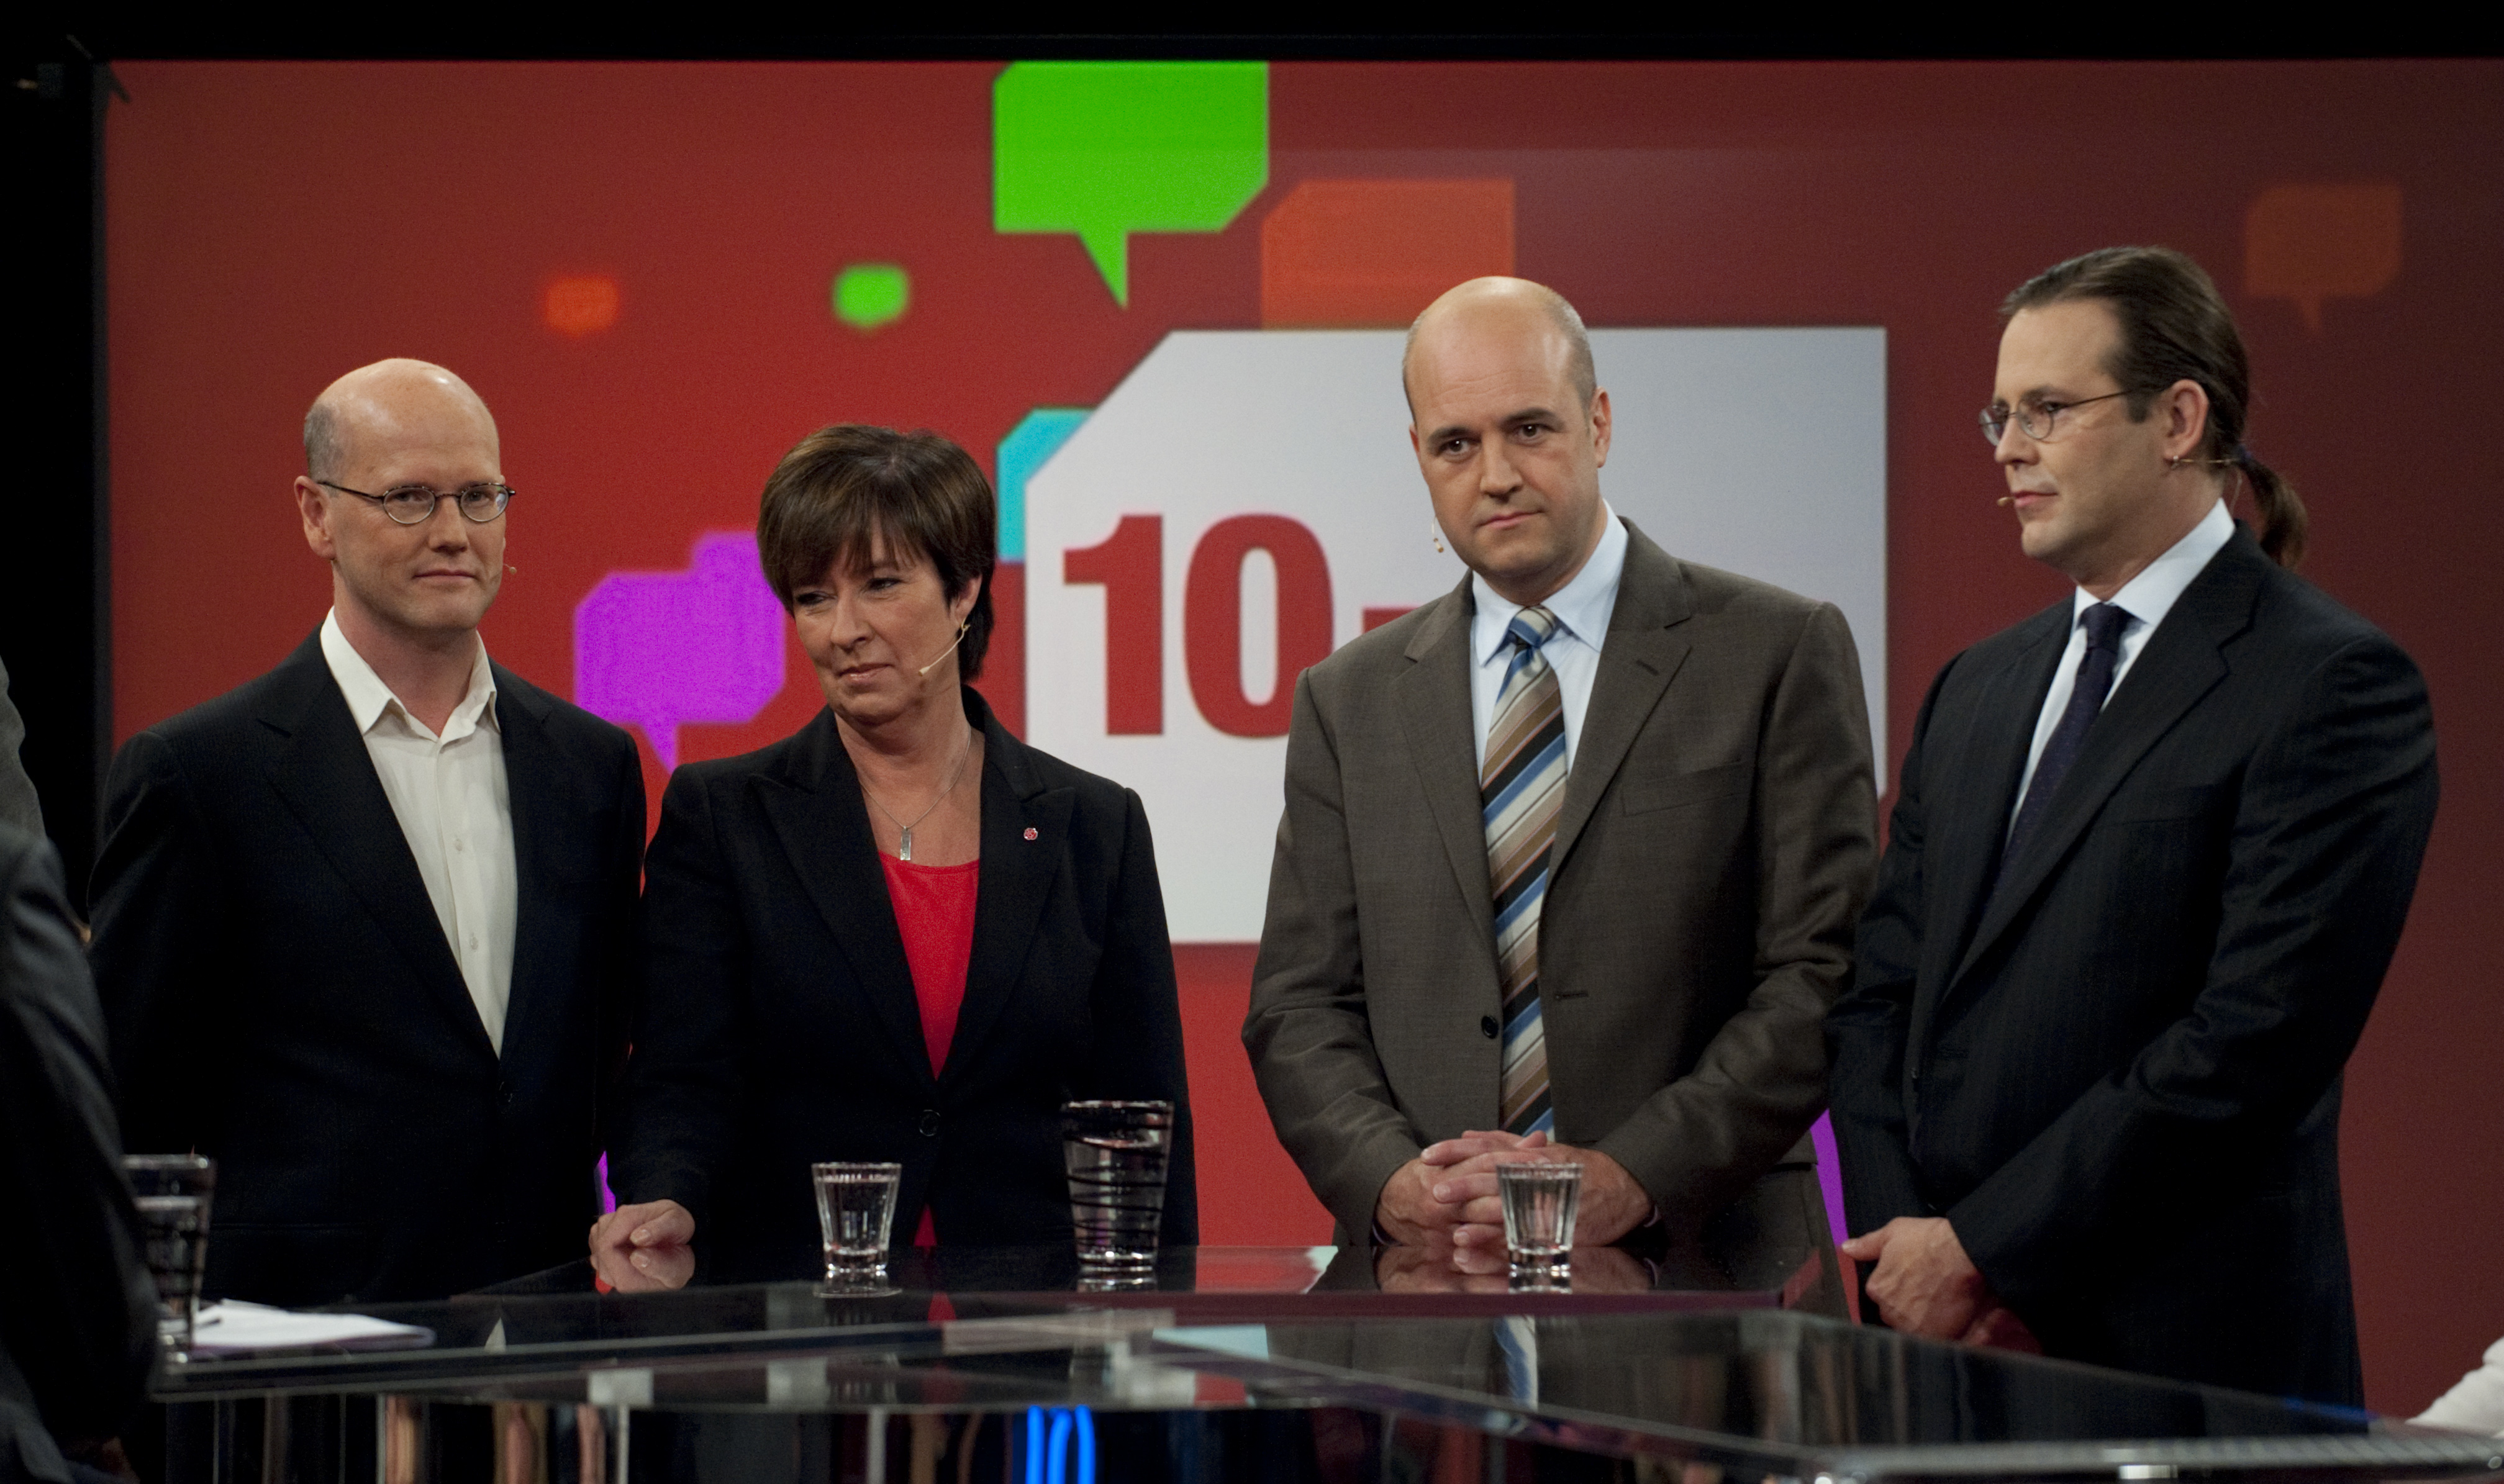 TV4, Riksdagsvalet 2010, Lennart Ekdal, Socialdemokraterna, Partiledardebatt, Mona Sahlin, Fredrik Reinfeldt, Moderaterna, Lennart Ekdahl, Kvällsöppet